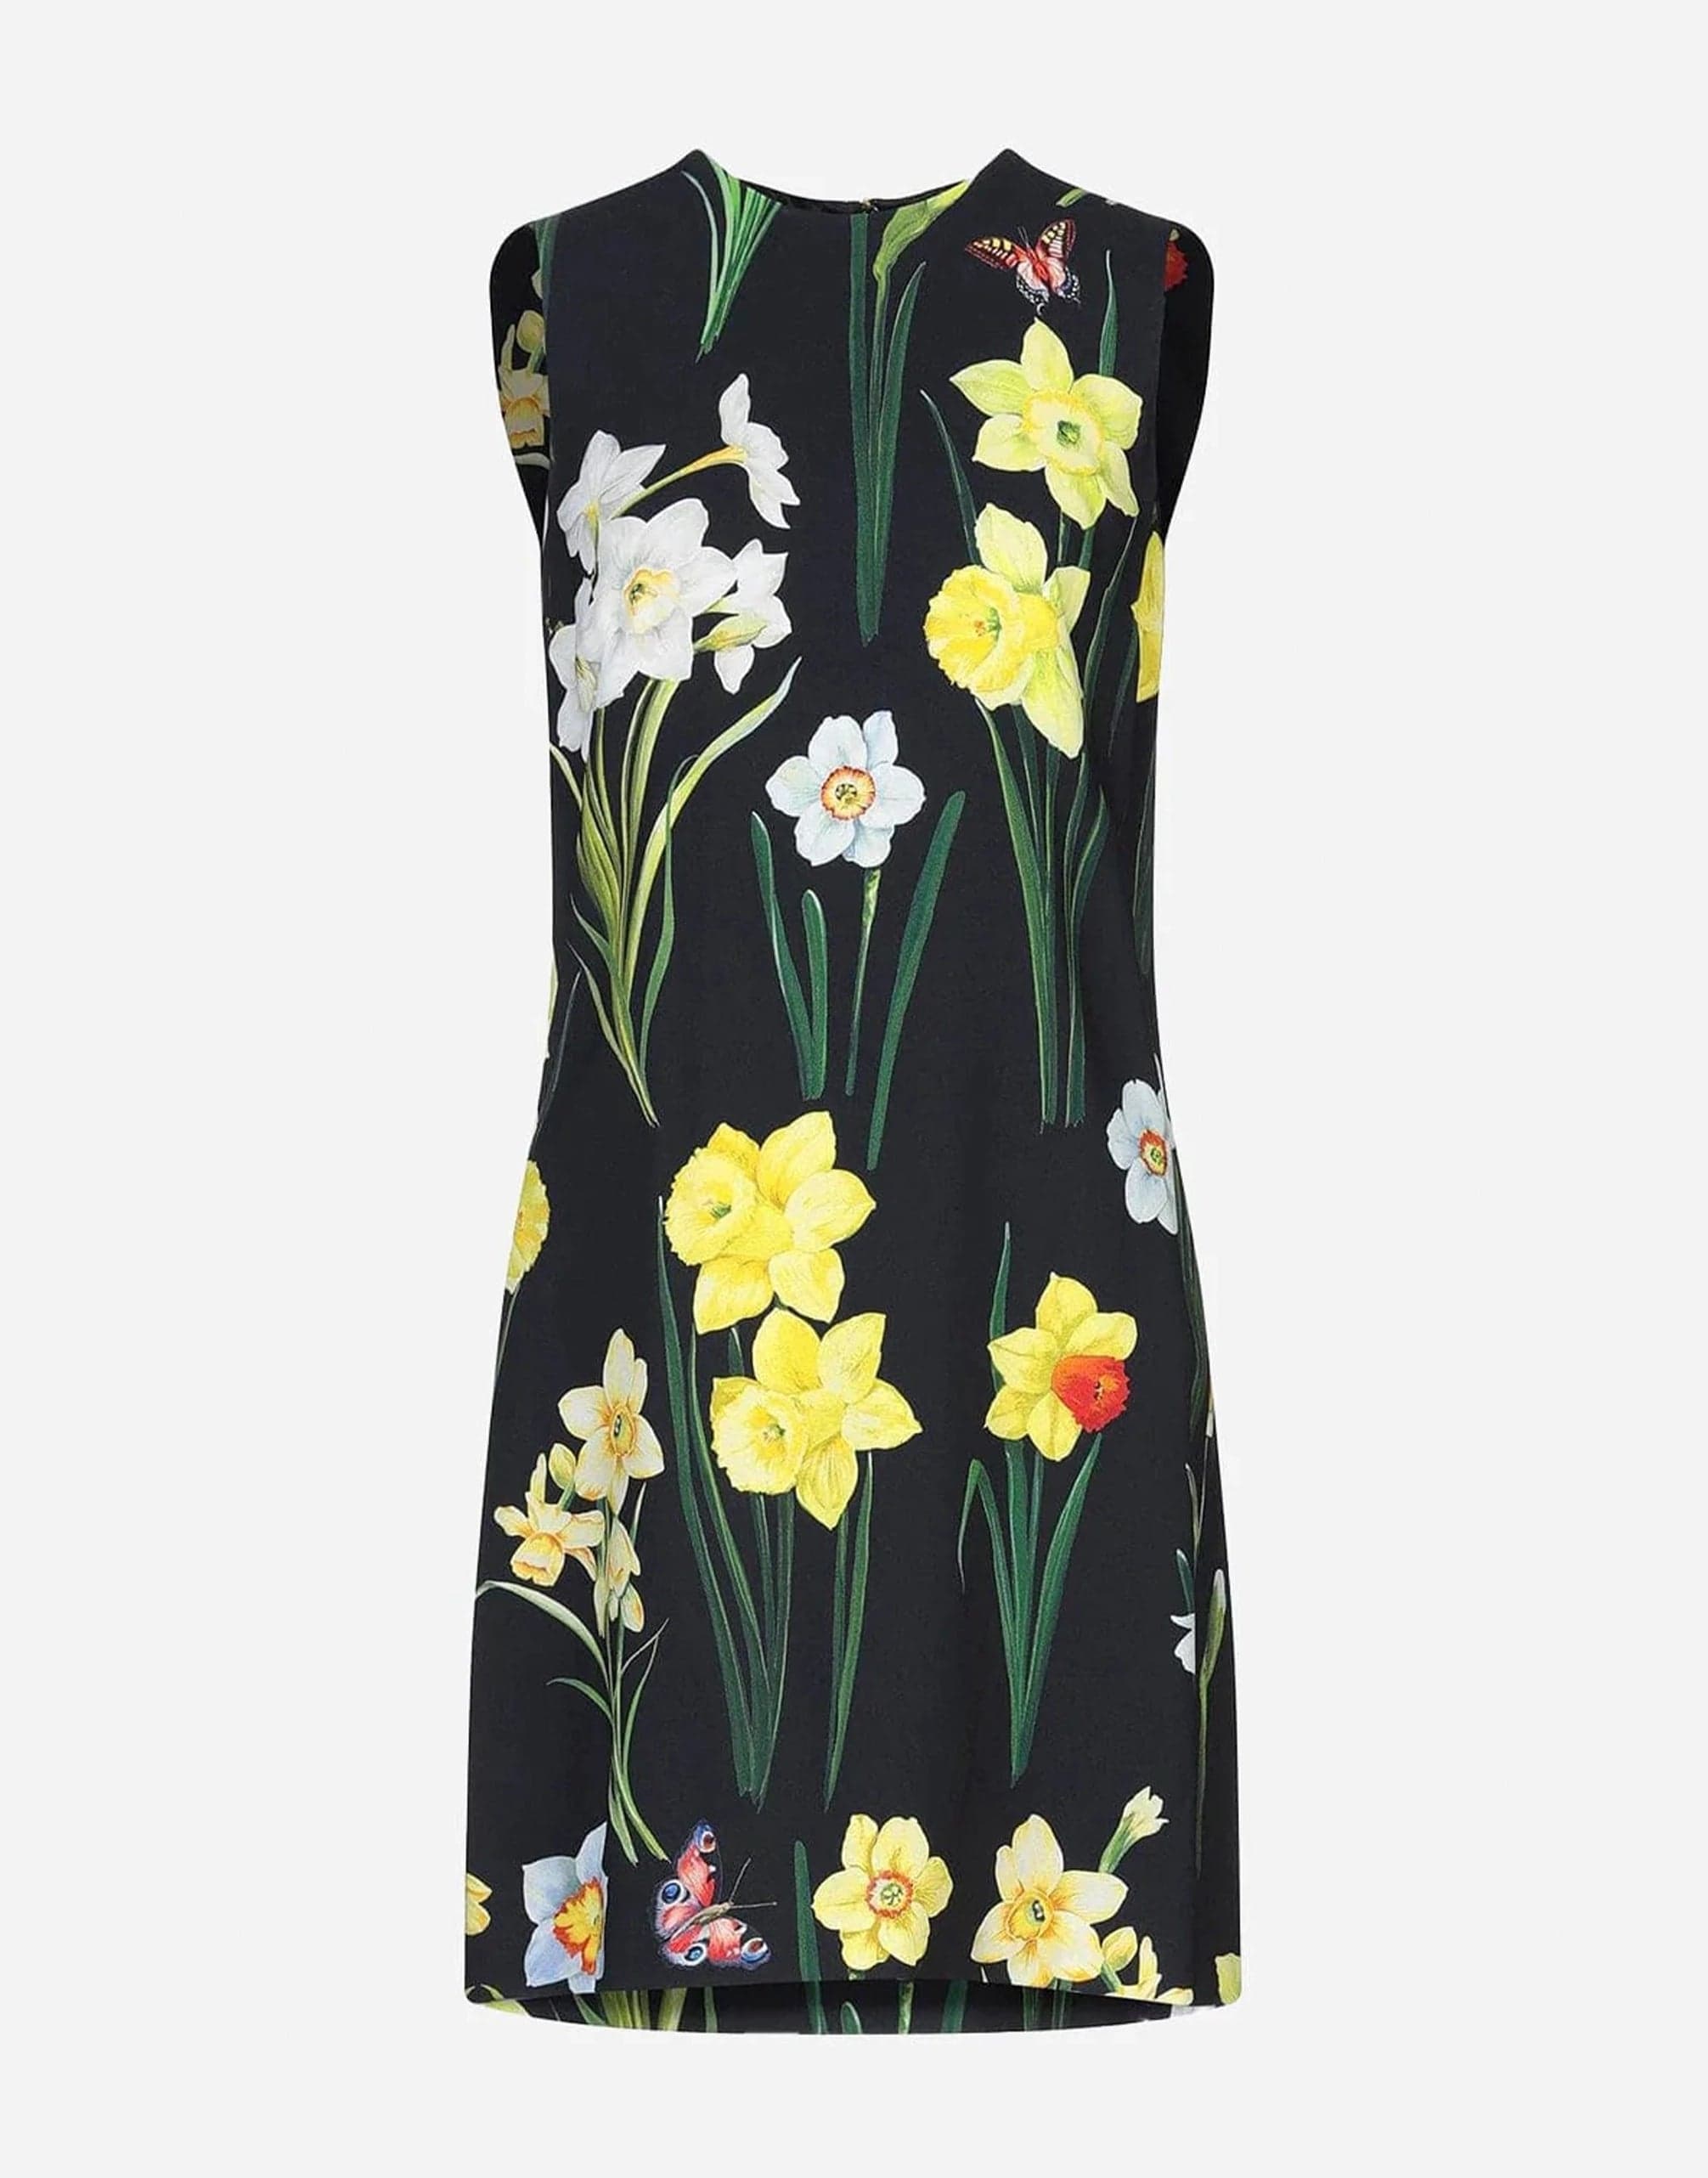 Dolce & Gabbana Daffodil Print Crochet Cady Dress